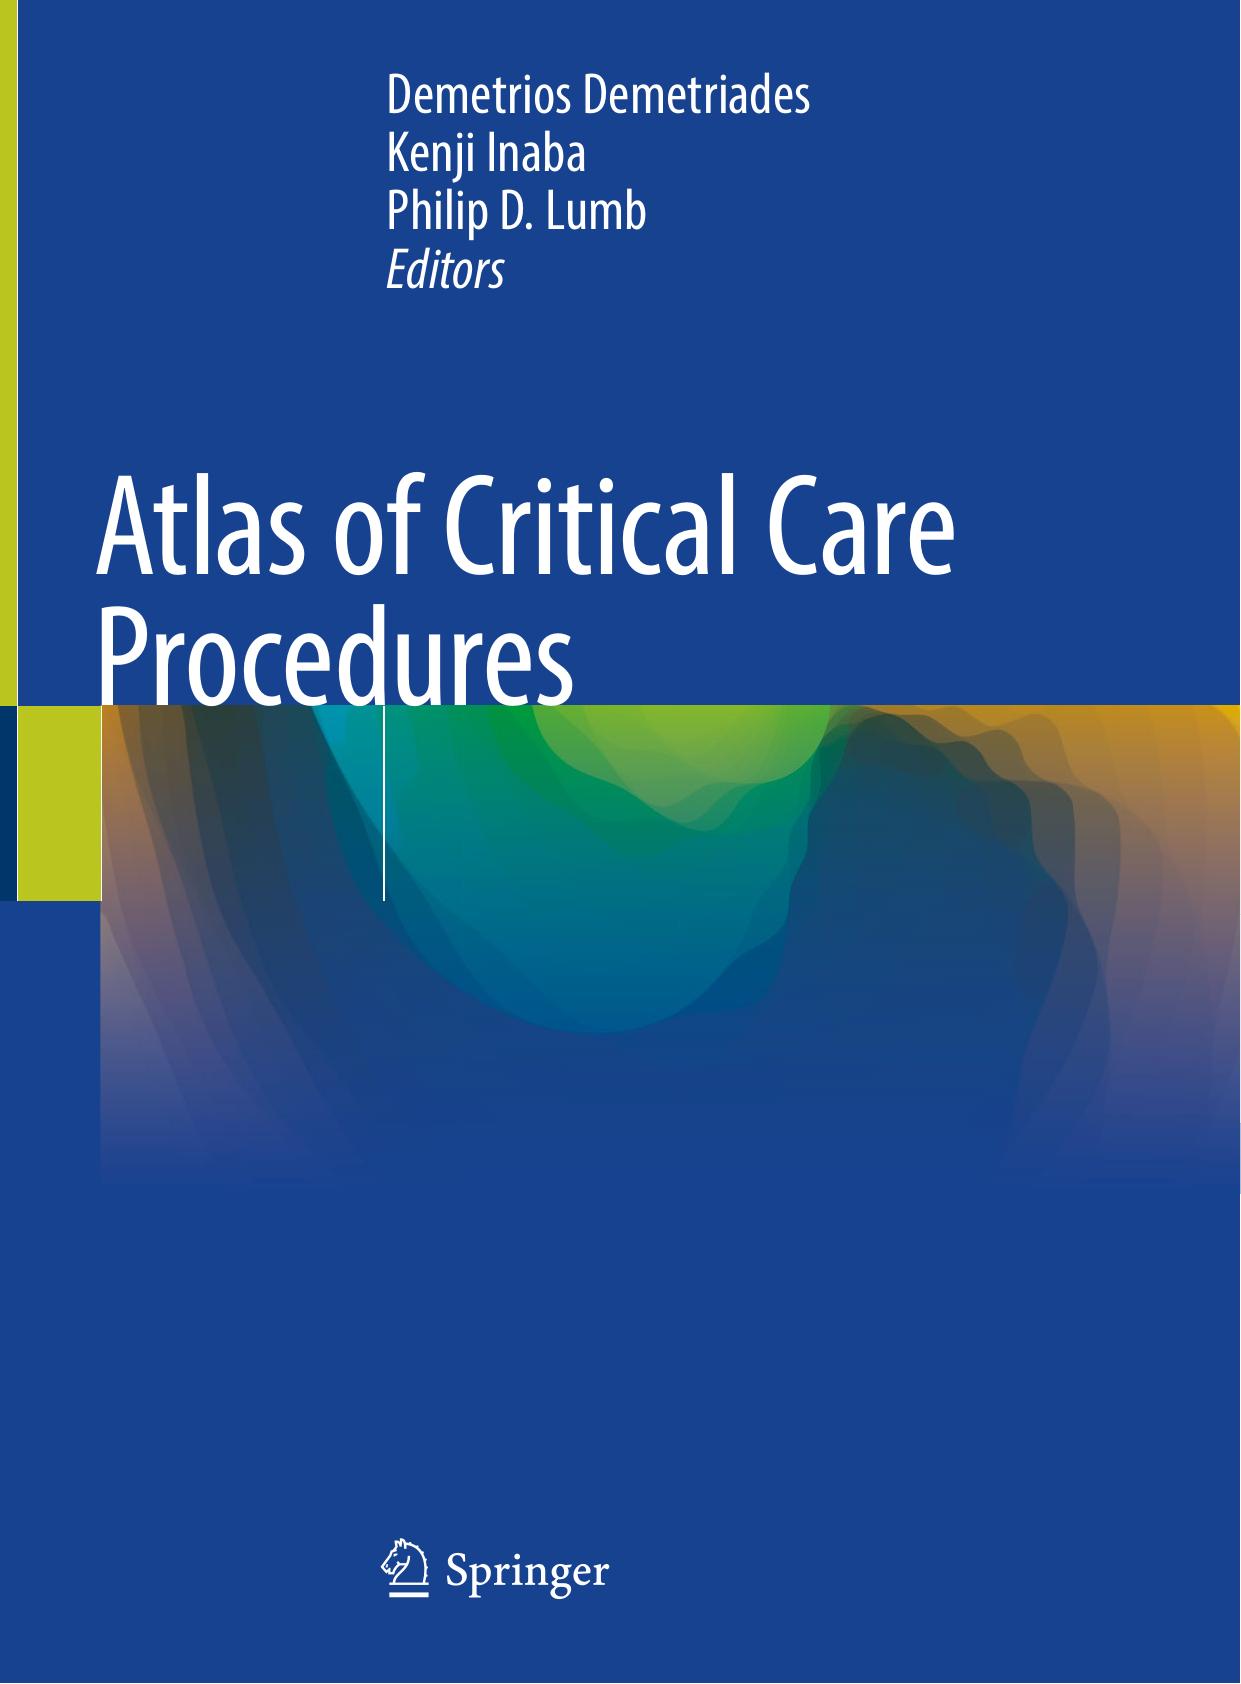 Atlas of Critical Care Procedures by Demetrios Demetriades